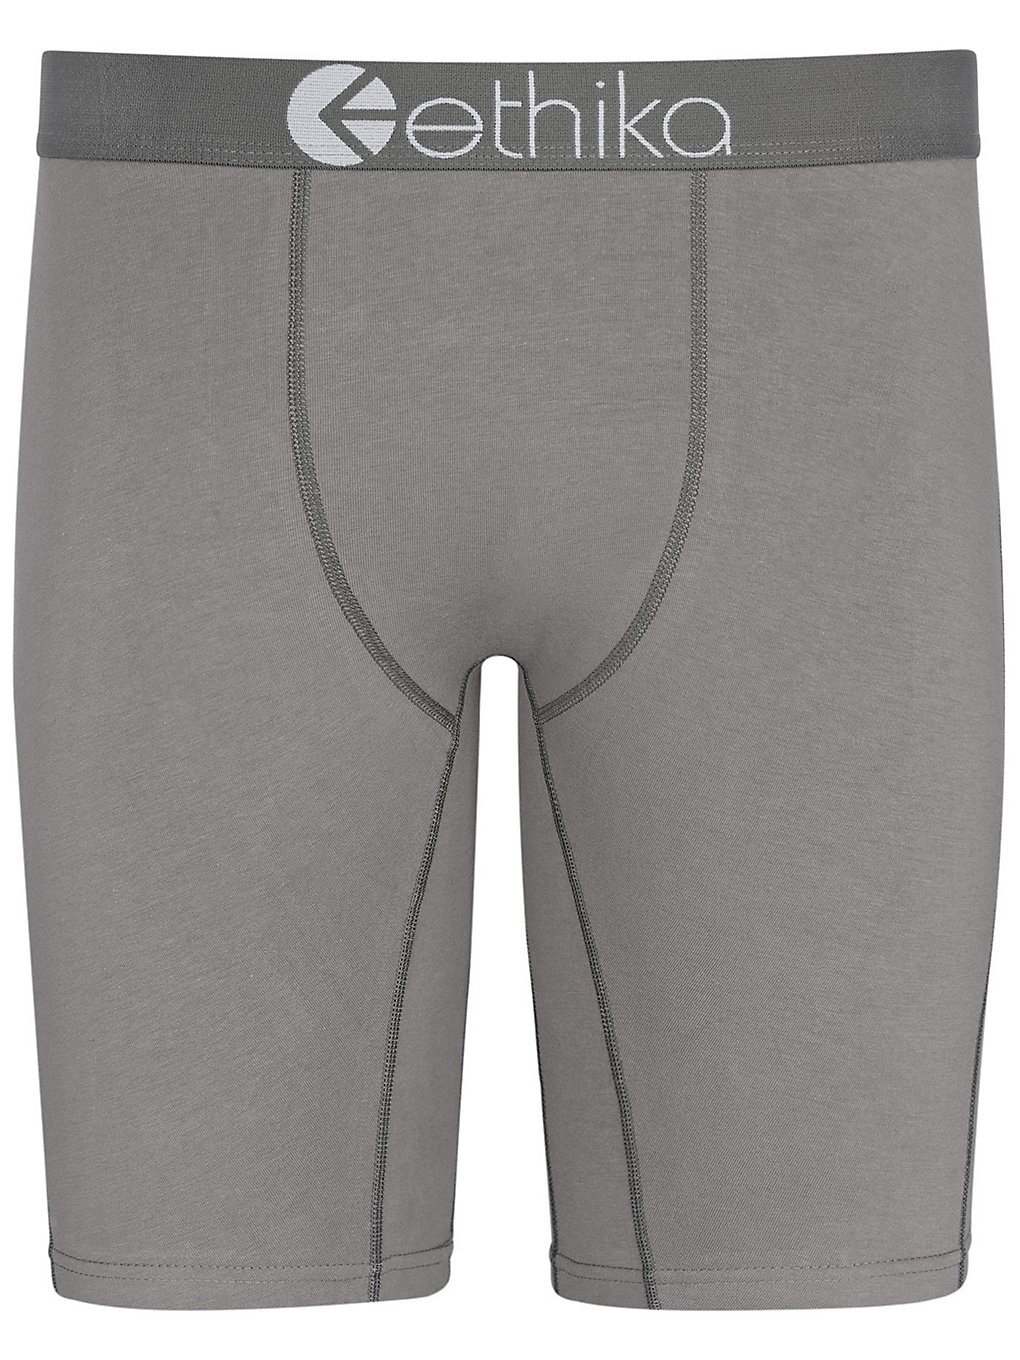 Ethika film gray boxershorts harmaa, ethika